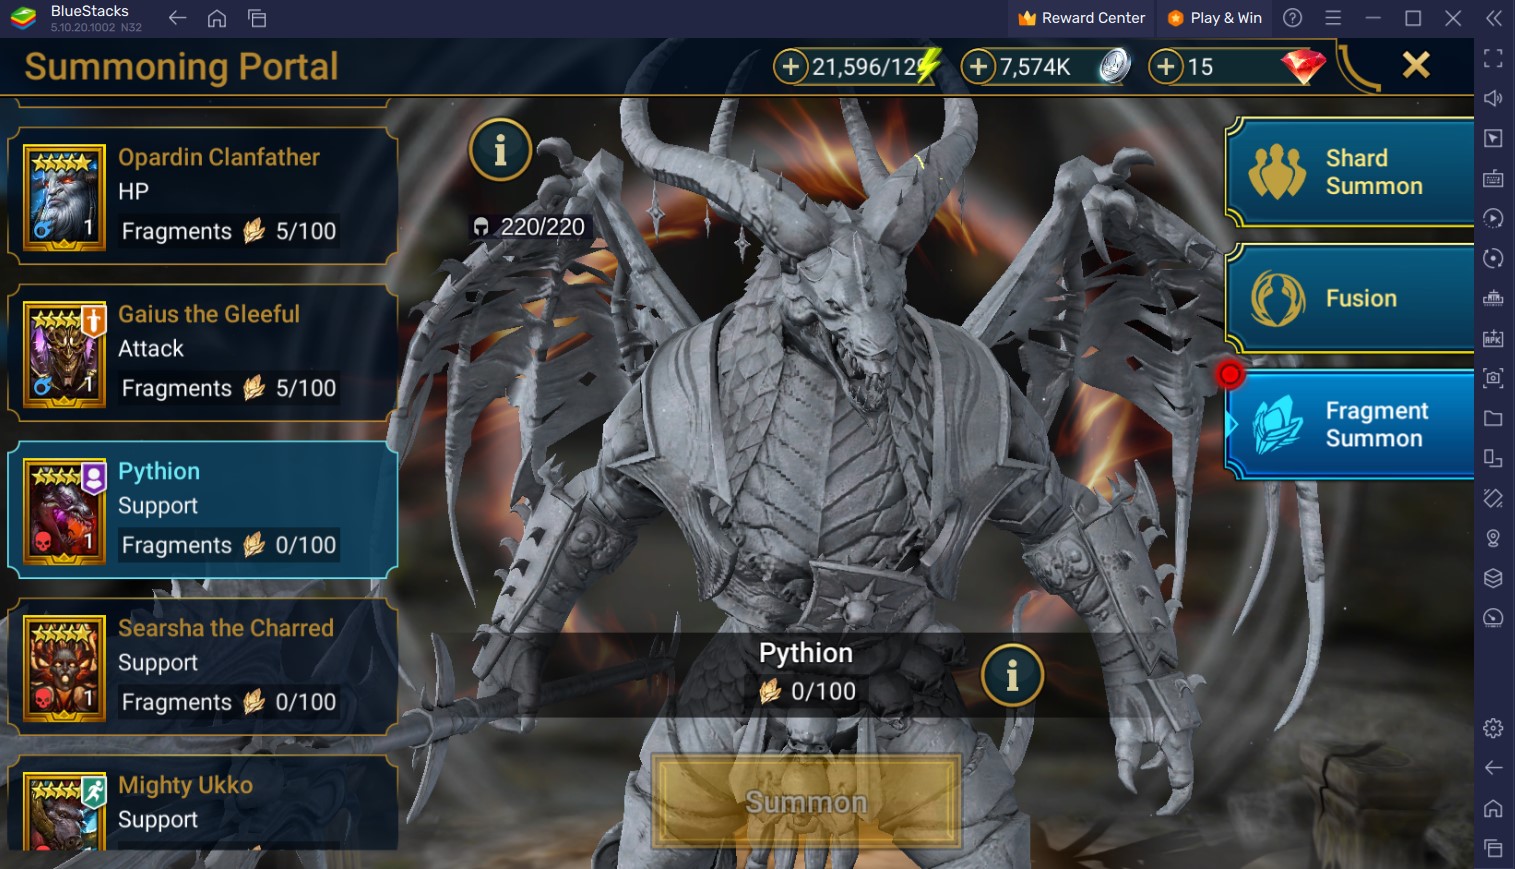 RAID: Shadow Legends – Pythion Fragment Fusion Event Guide